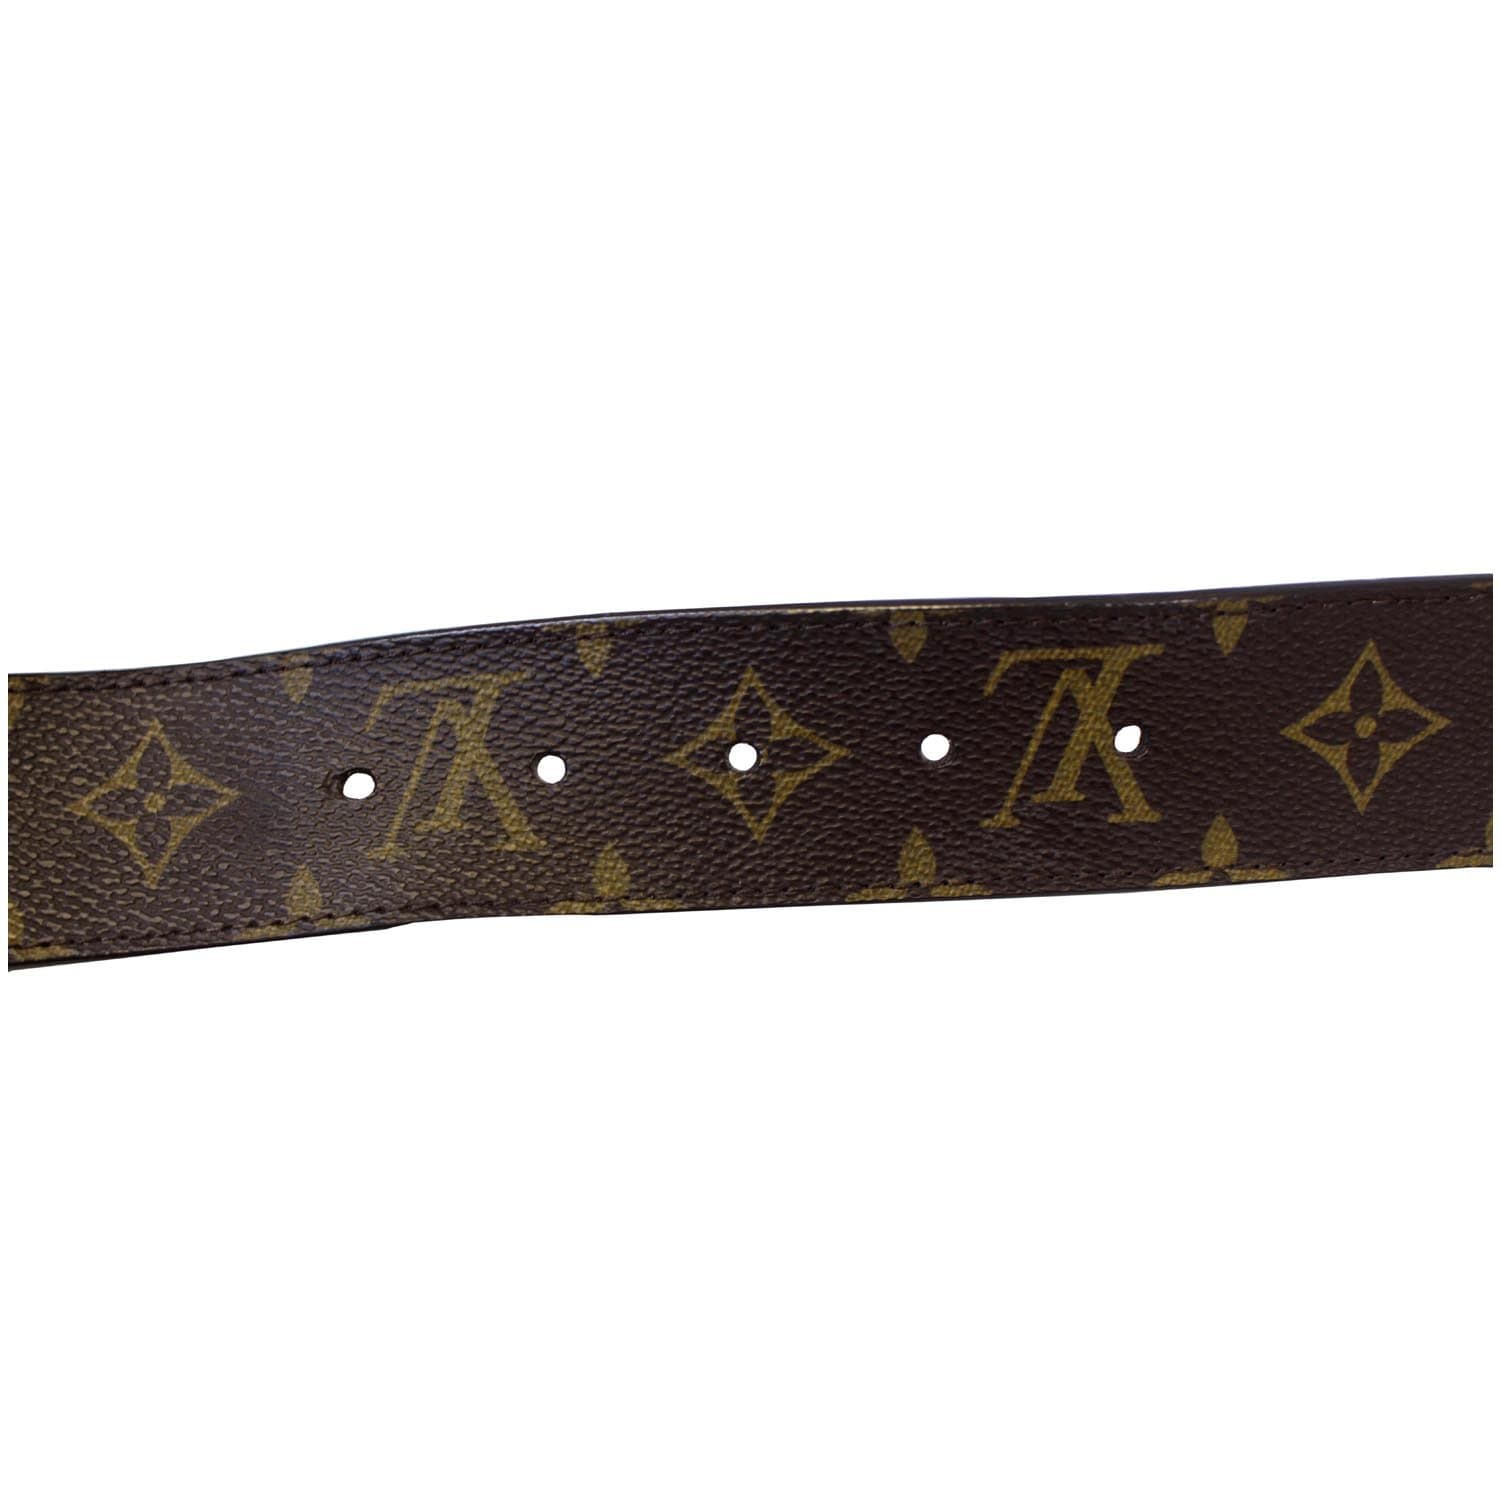 LOUIS VUITTON Signature Brown Monogram Chain Belt Size 110 • 44